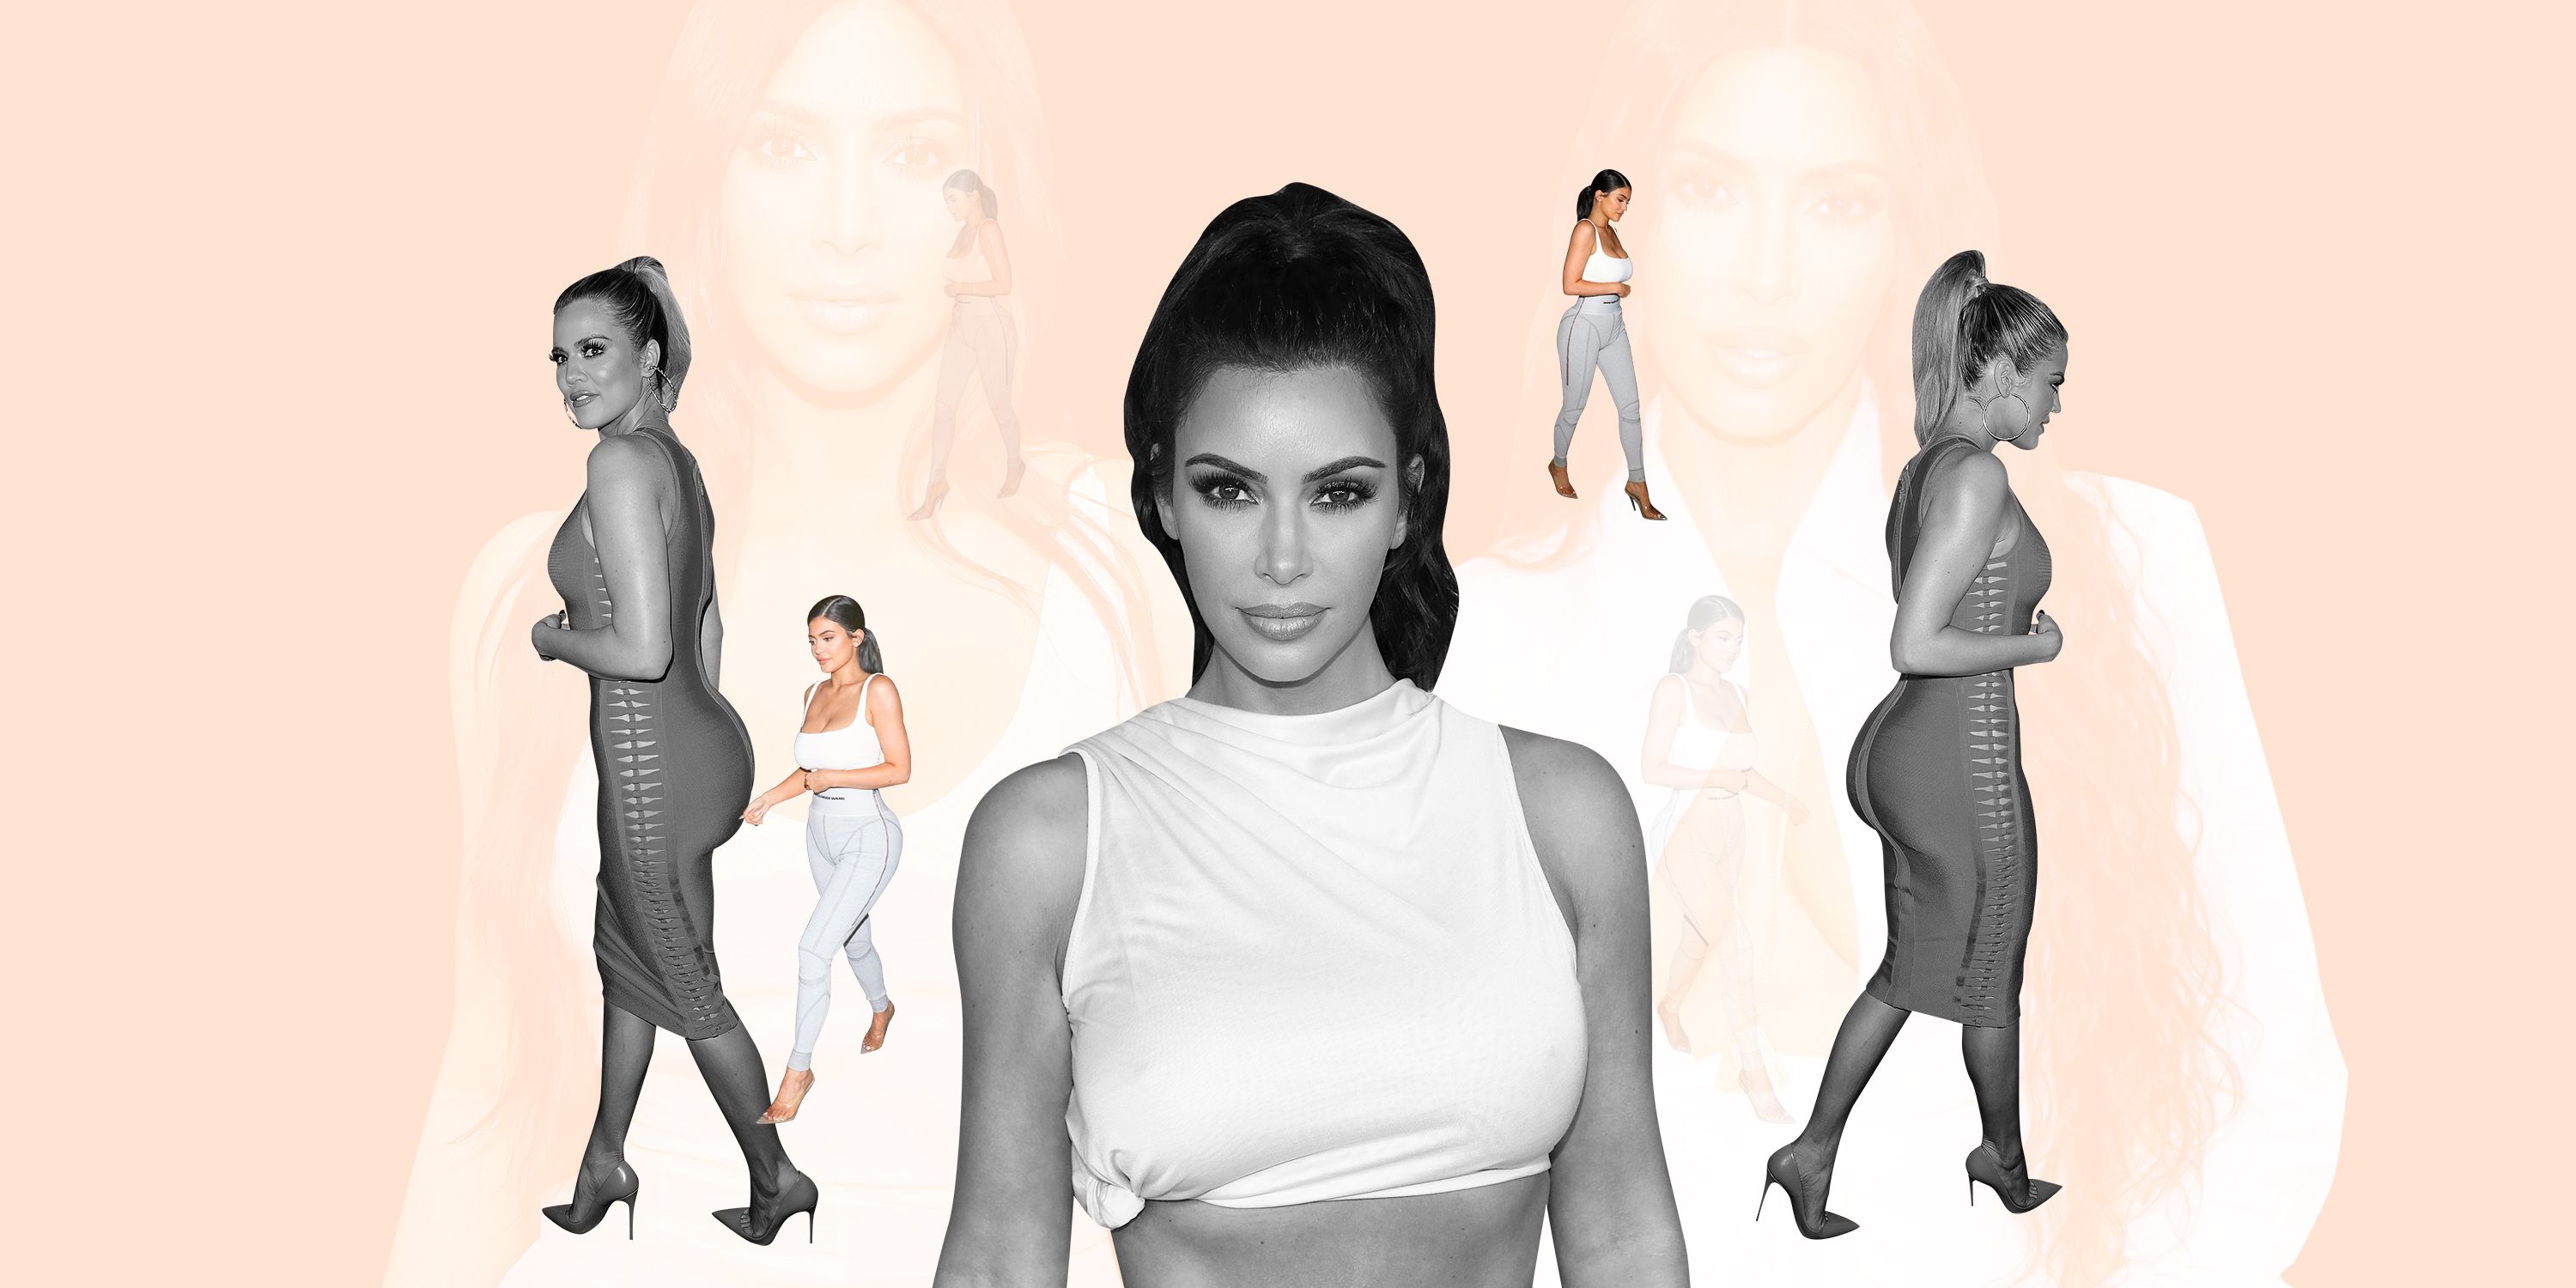 Kim Kardashian Body Type Becoming Less Popular, Say Plastic Surgeons